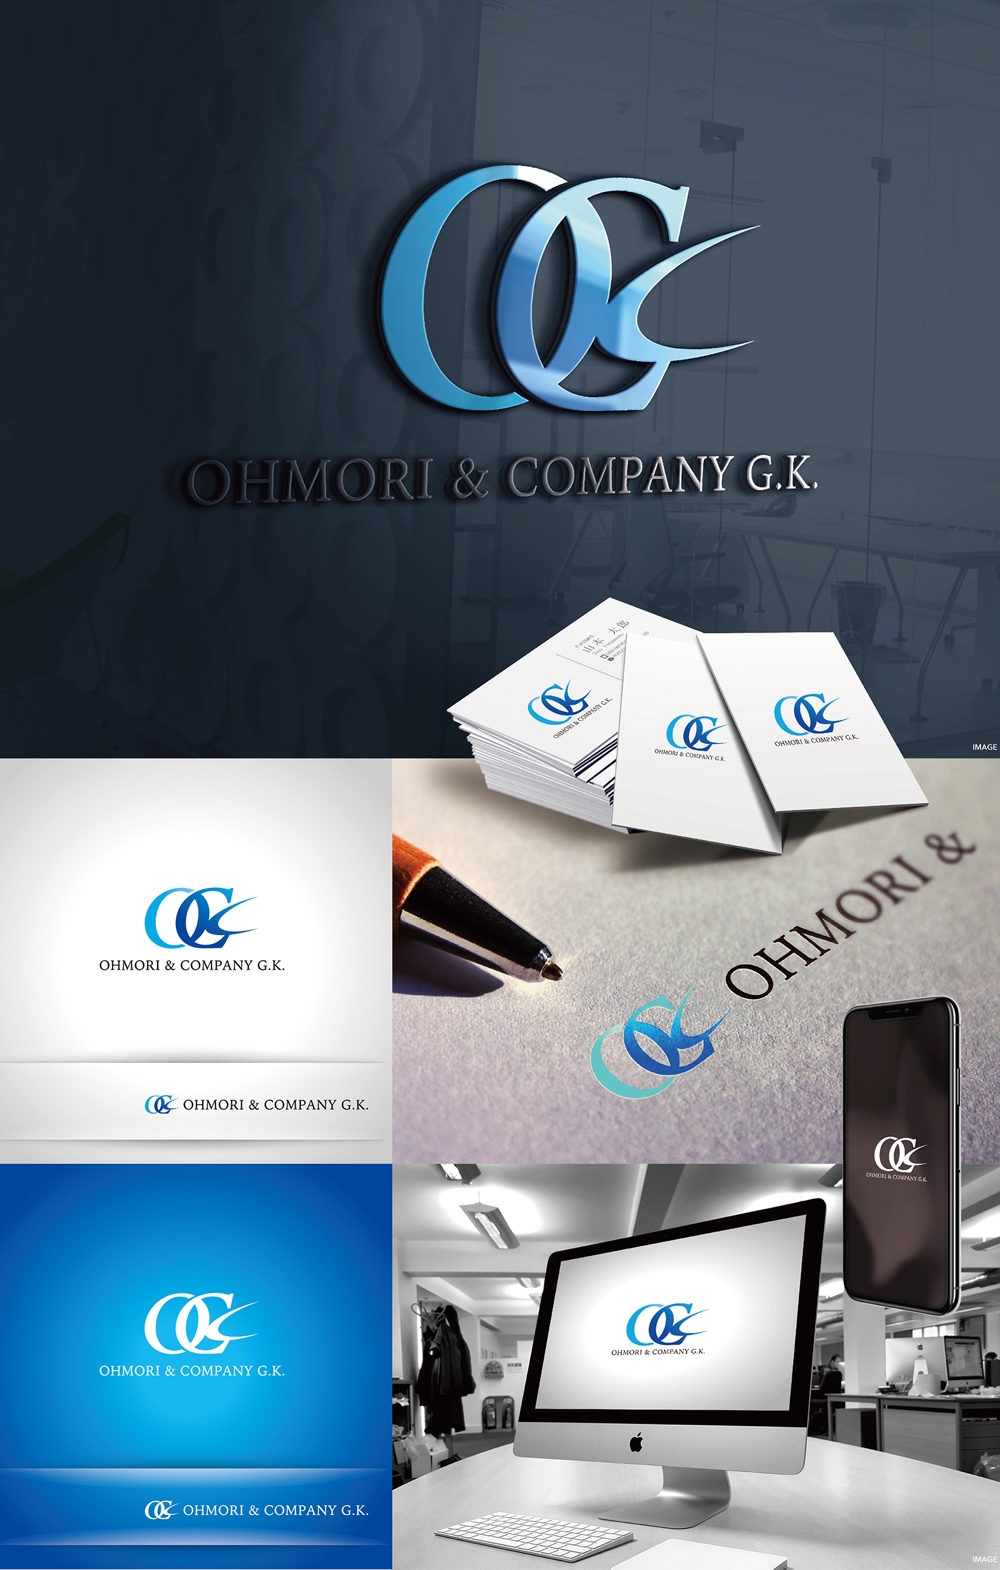 OHMORI & COMPANY G.K..jpg